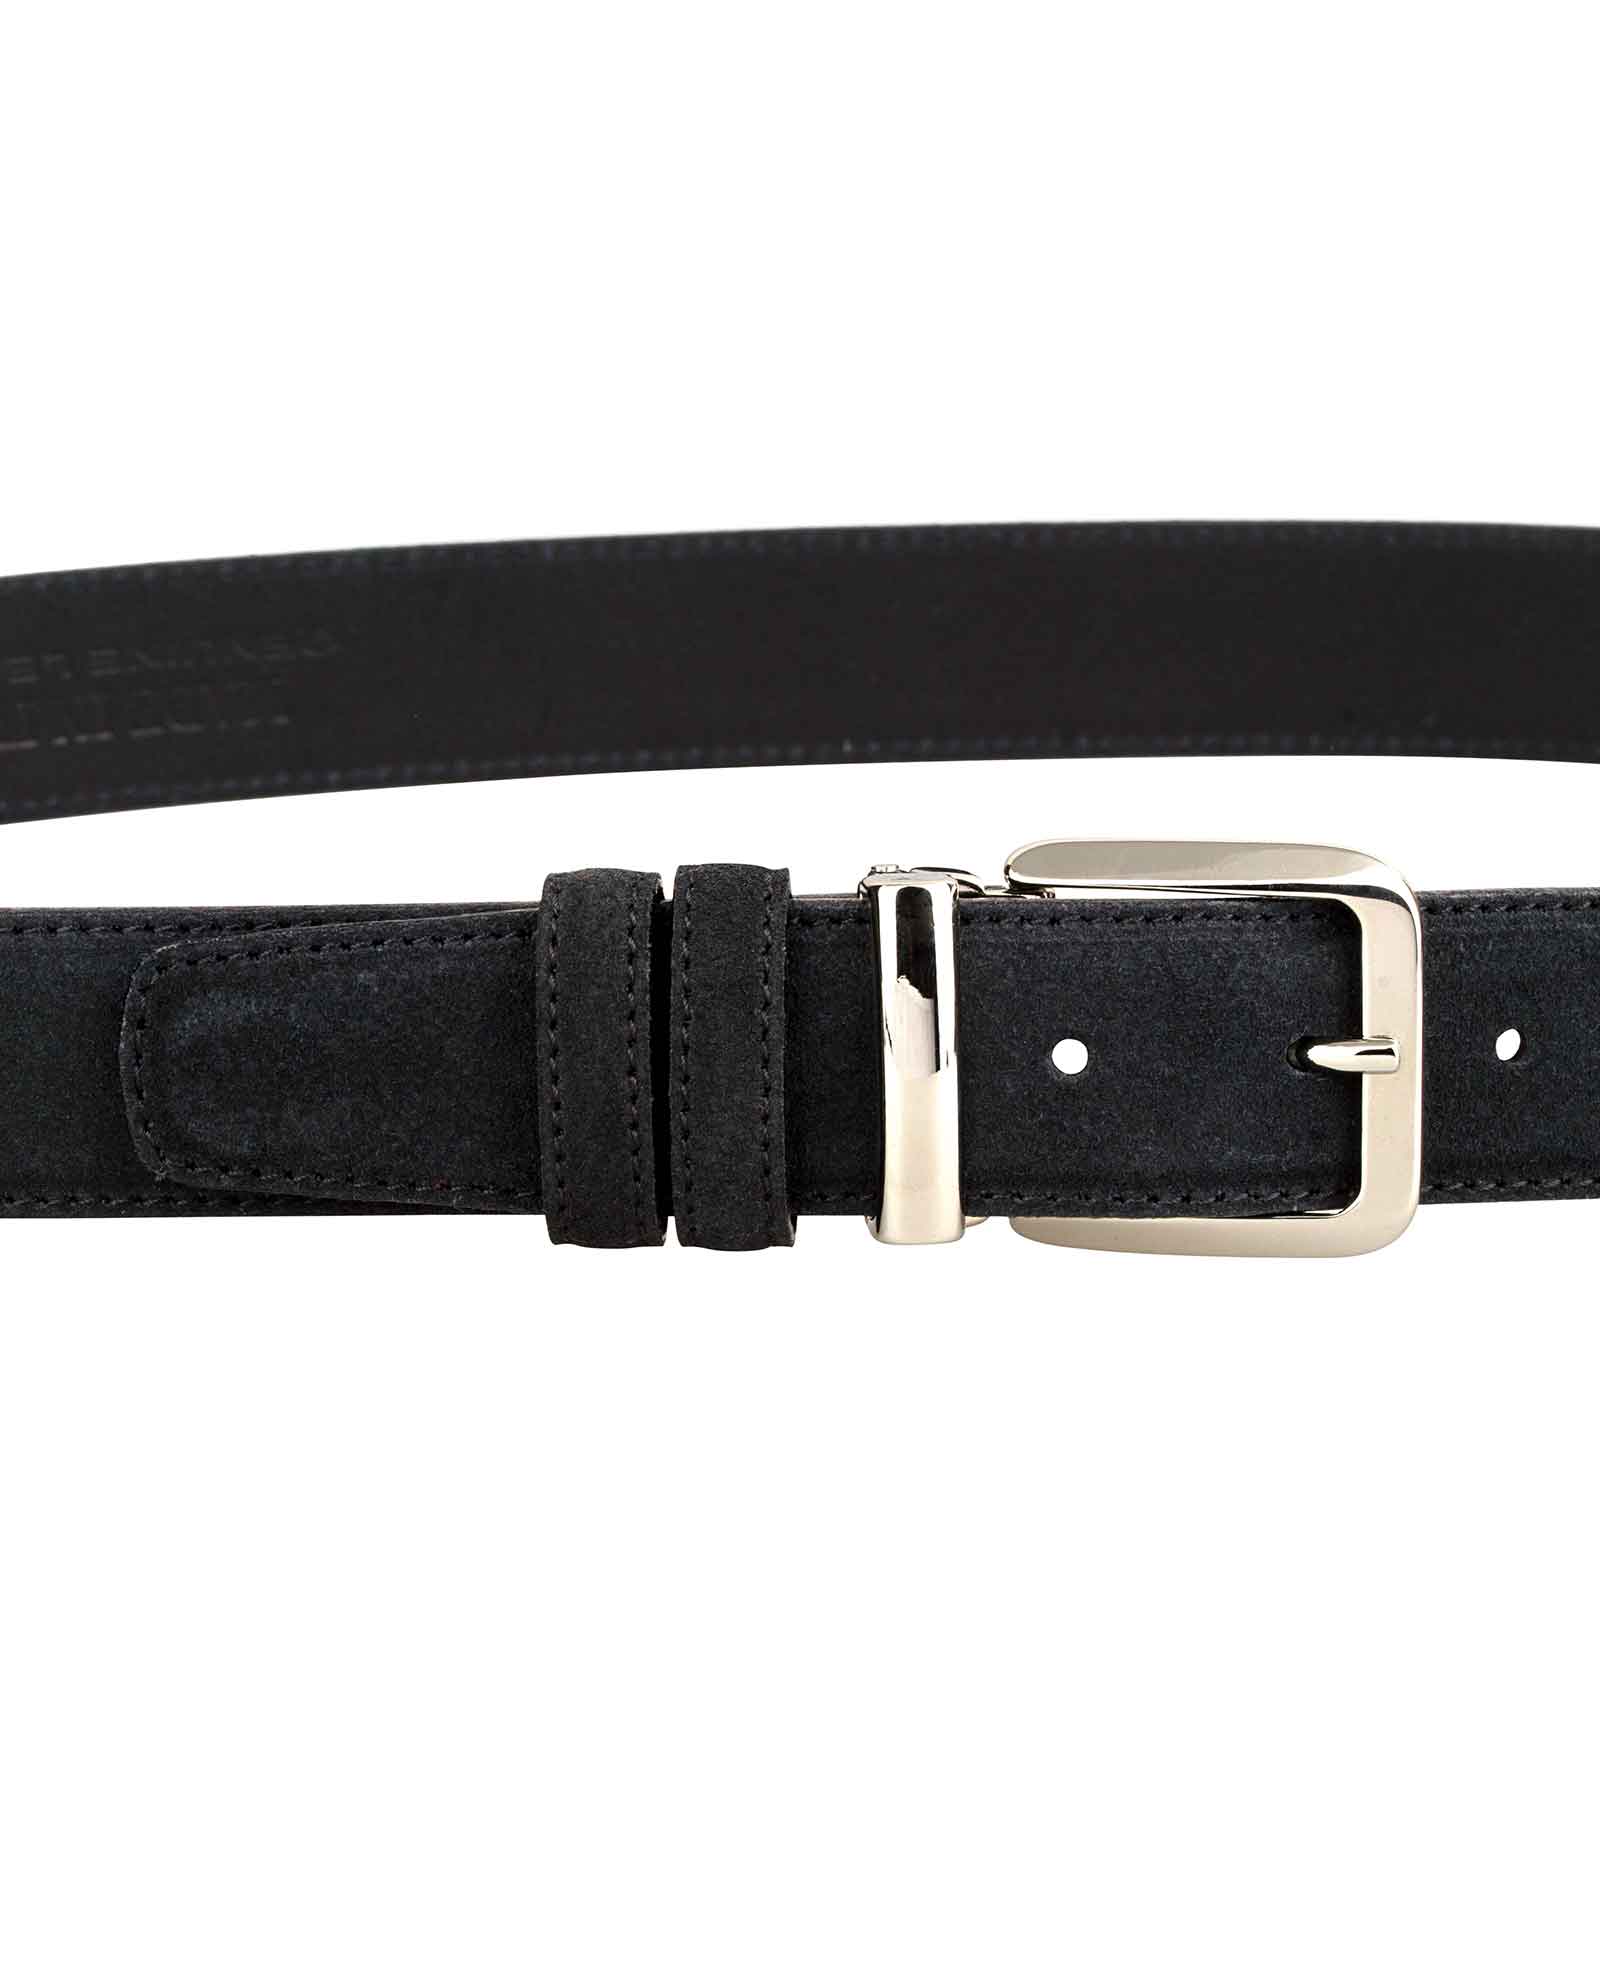 Buy Black Suede Belt - Italian Leather & Buckle - Free Shipping!